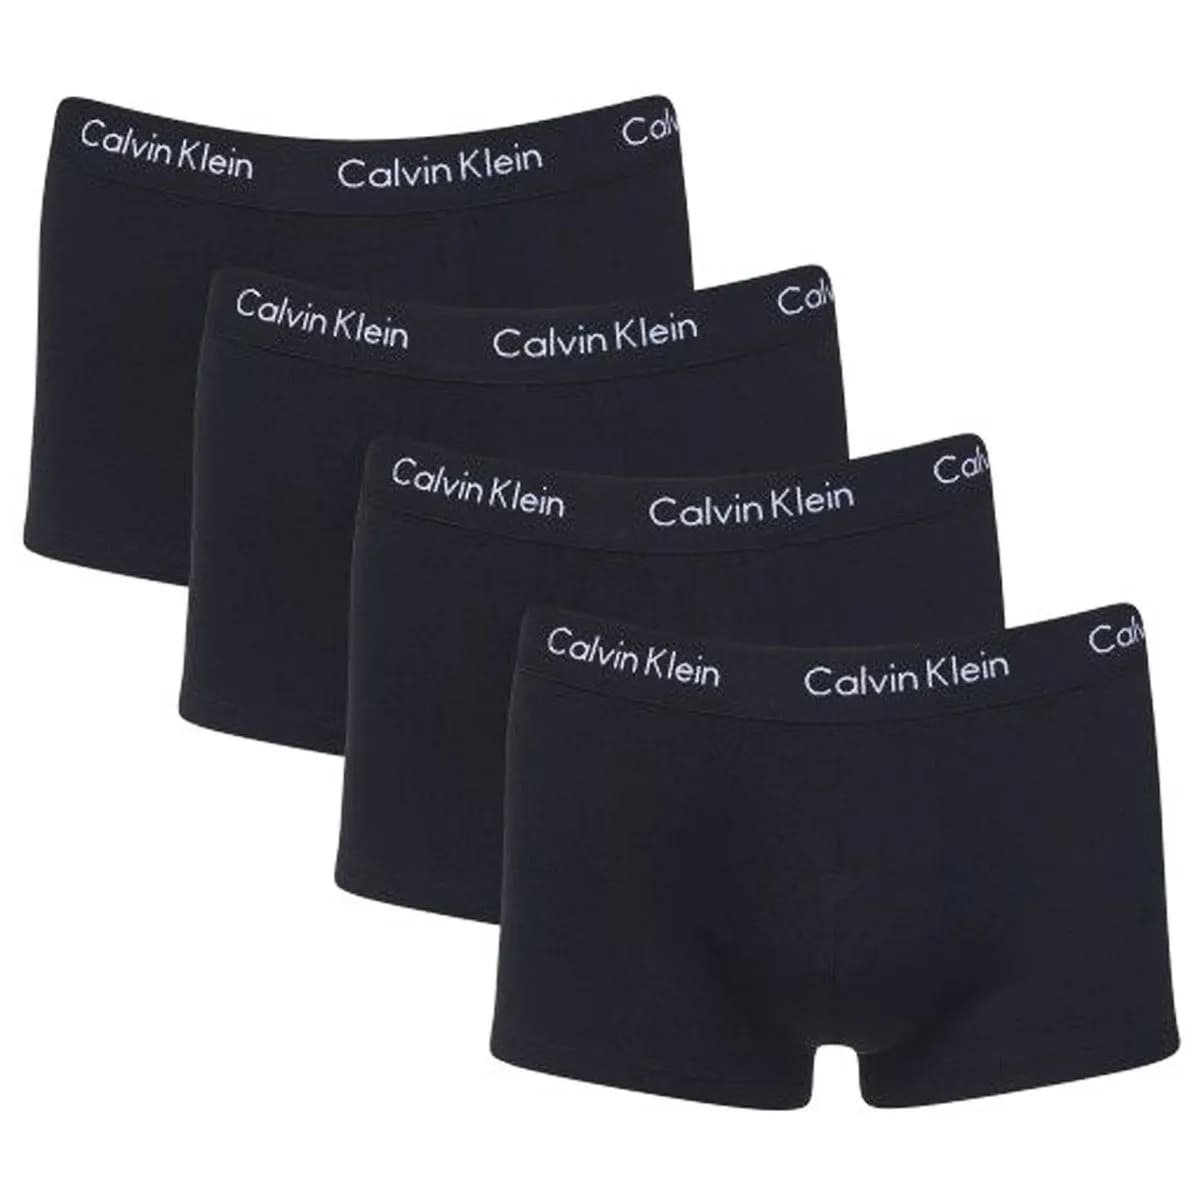 Calvin Klein Underwear COTTON STRETCH Low Rise Trunk LOW RISE TRUNK 7 PACK  Black